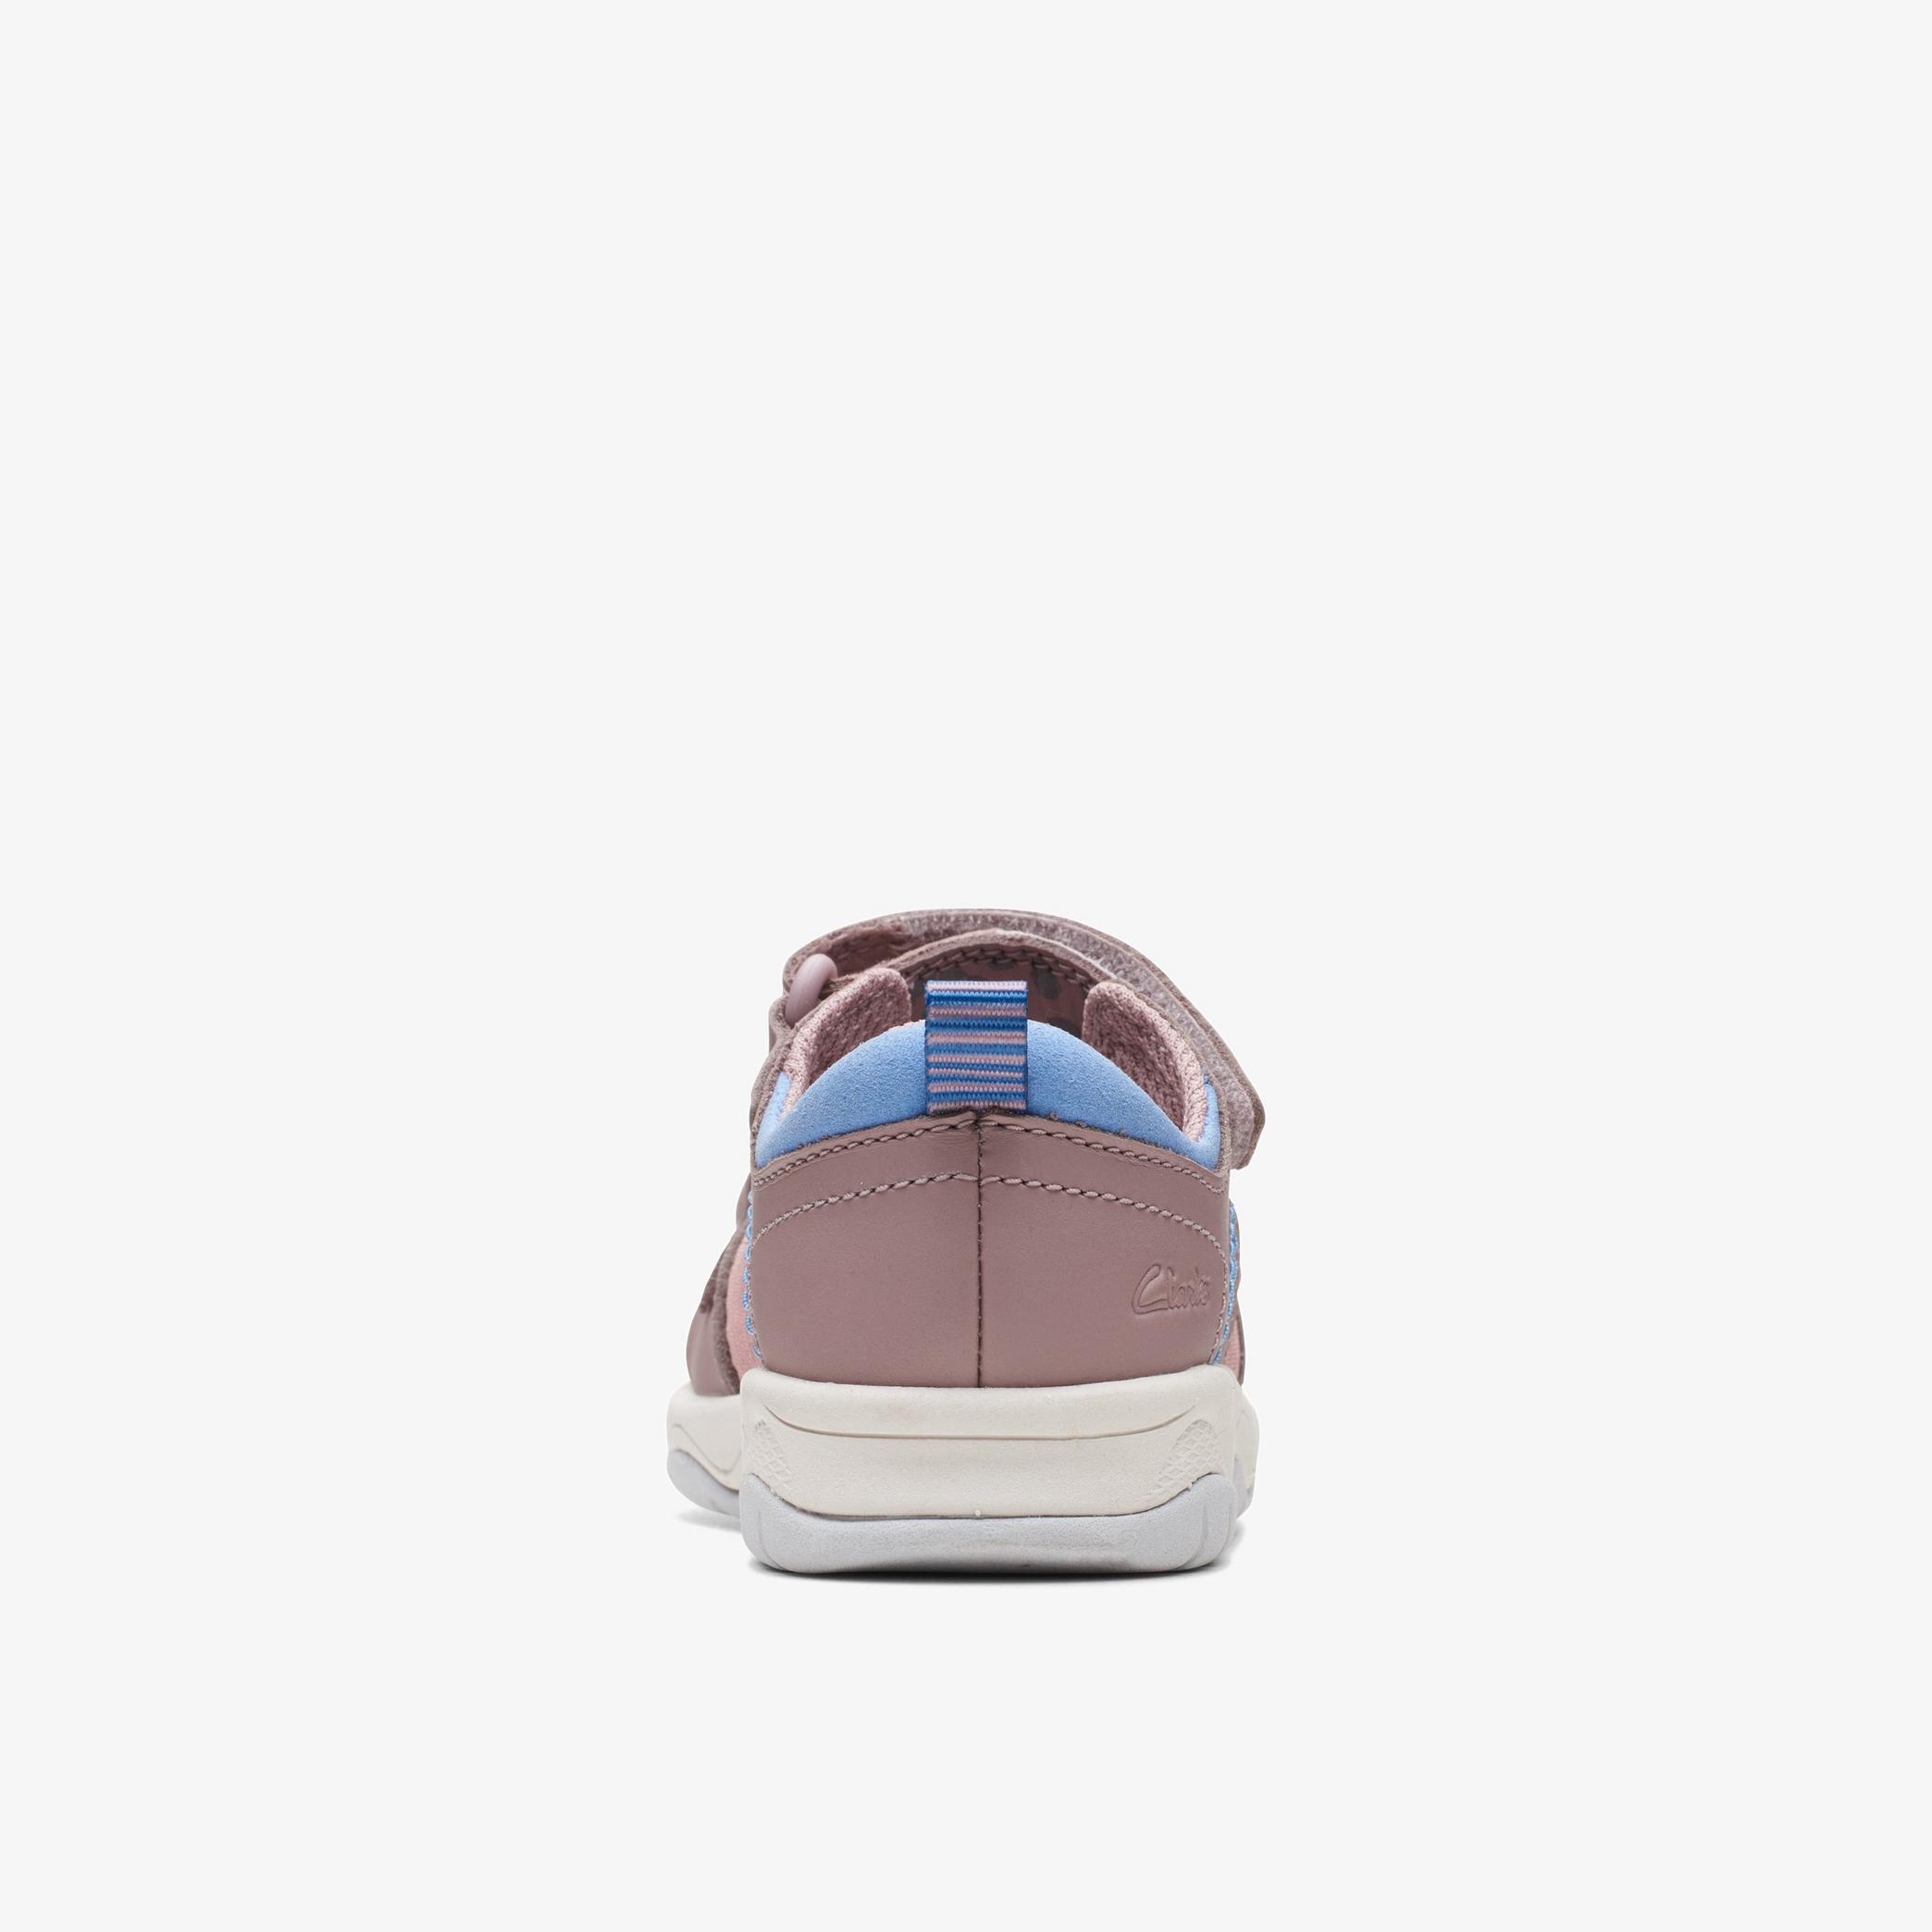 Clowder Print Toddler Grey/Pink Flat Sandals, view 5 of 6